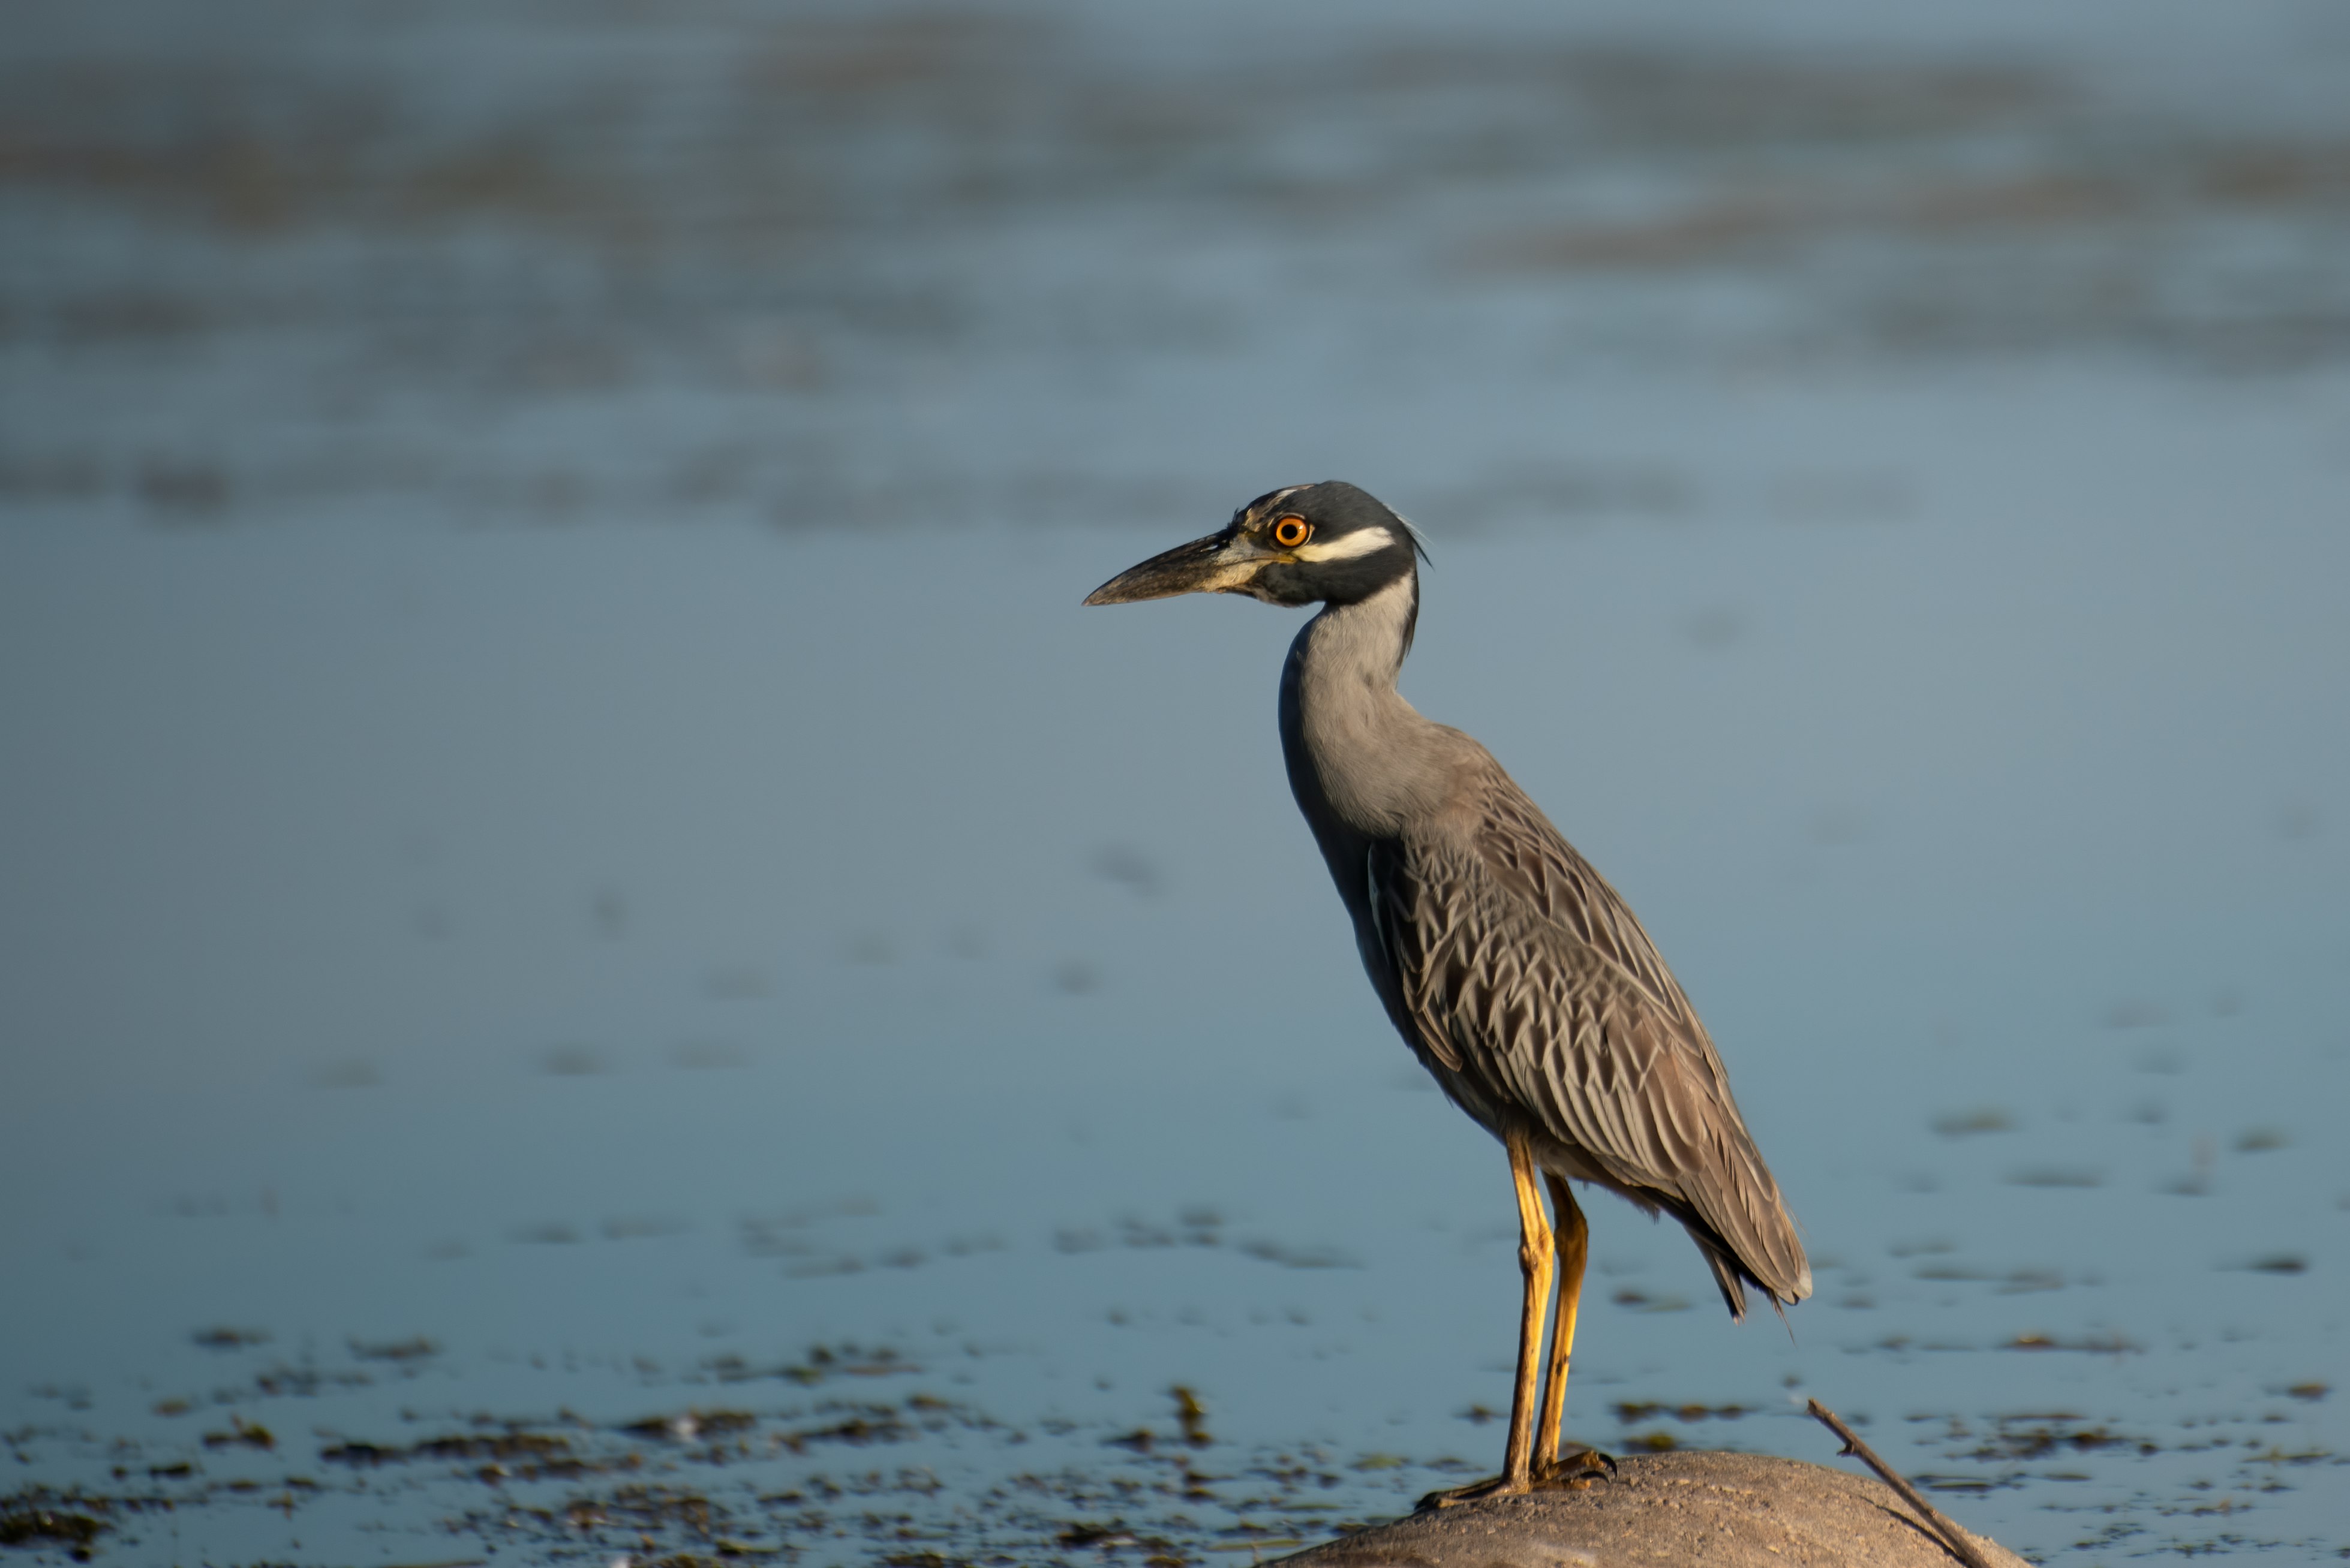 grey heron standing on brown rock near body of water during daytime